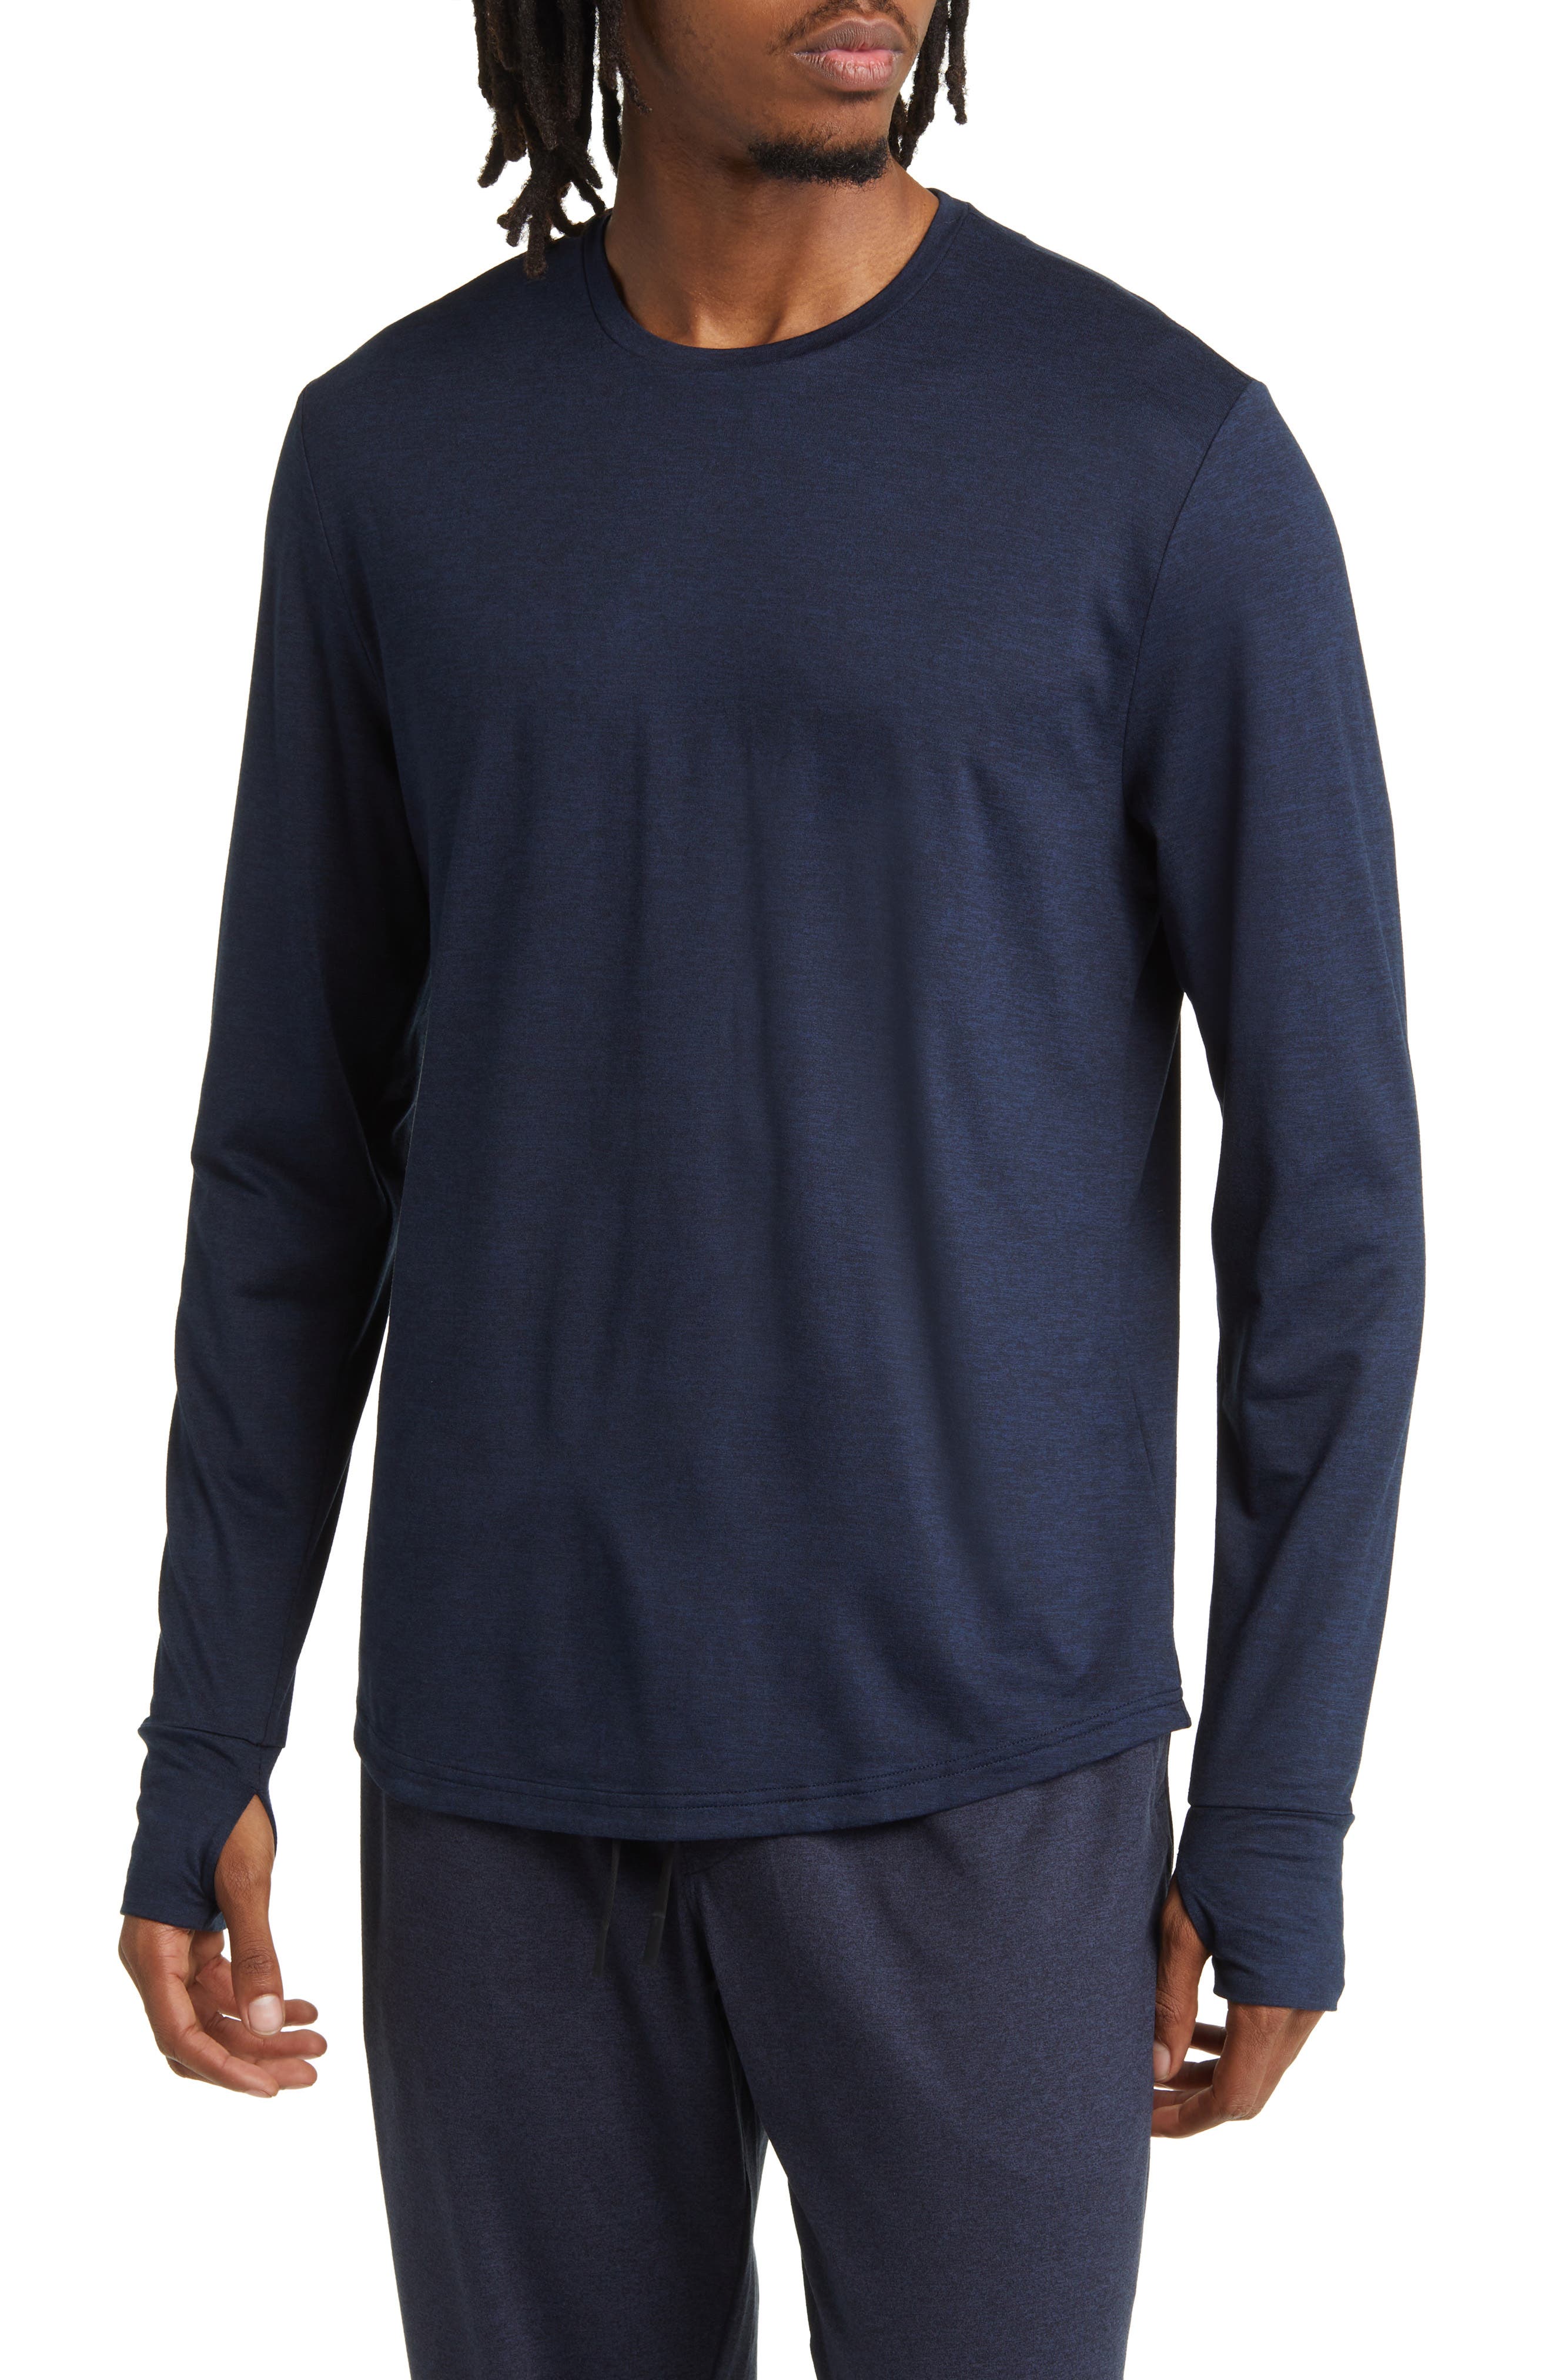 zella Restore Soft Performance Long Sleeve T-Shirt in Navy Eclipse